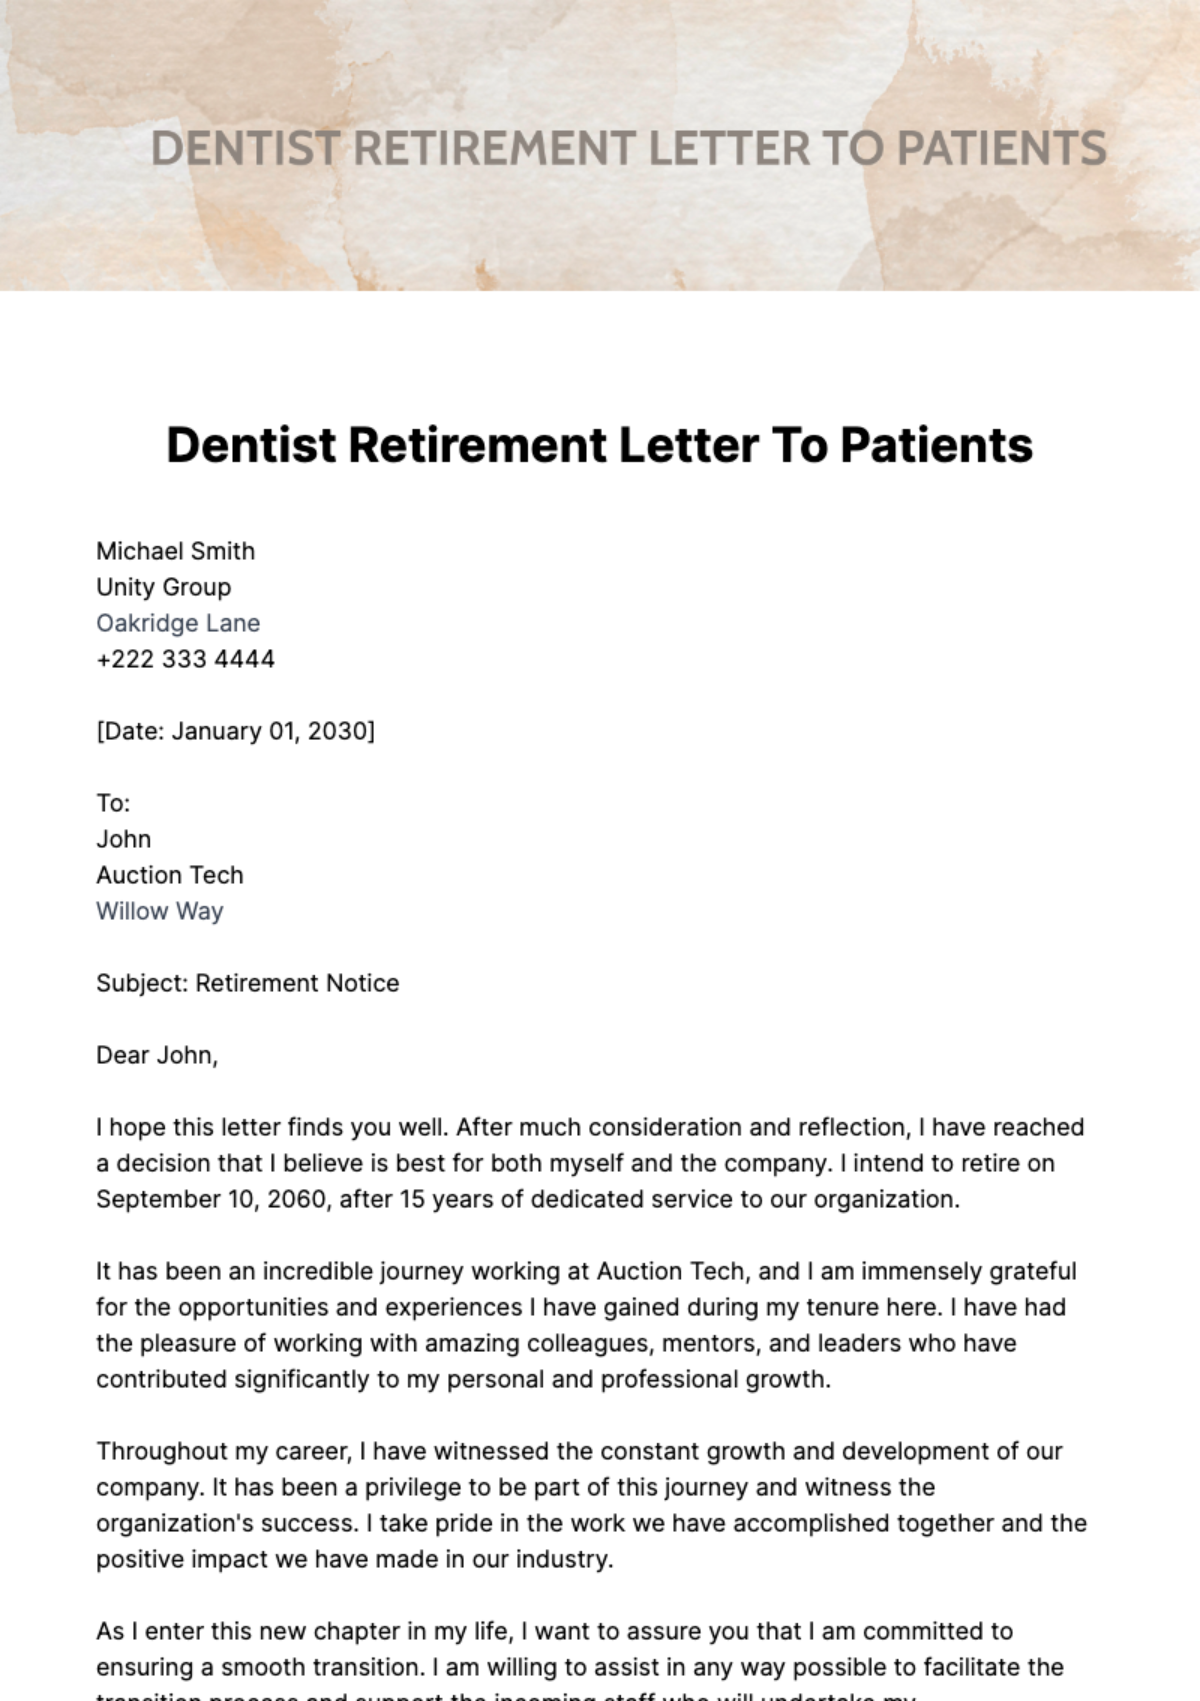 Dentist Retirement Letter To Patients Template